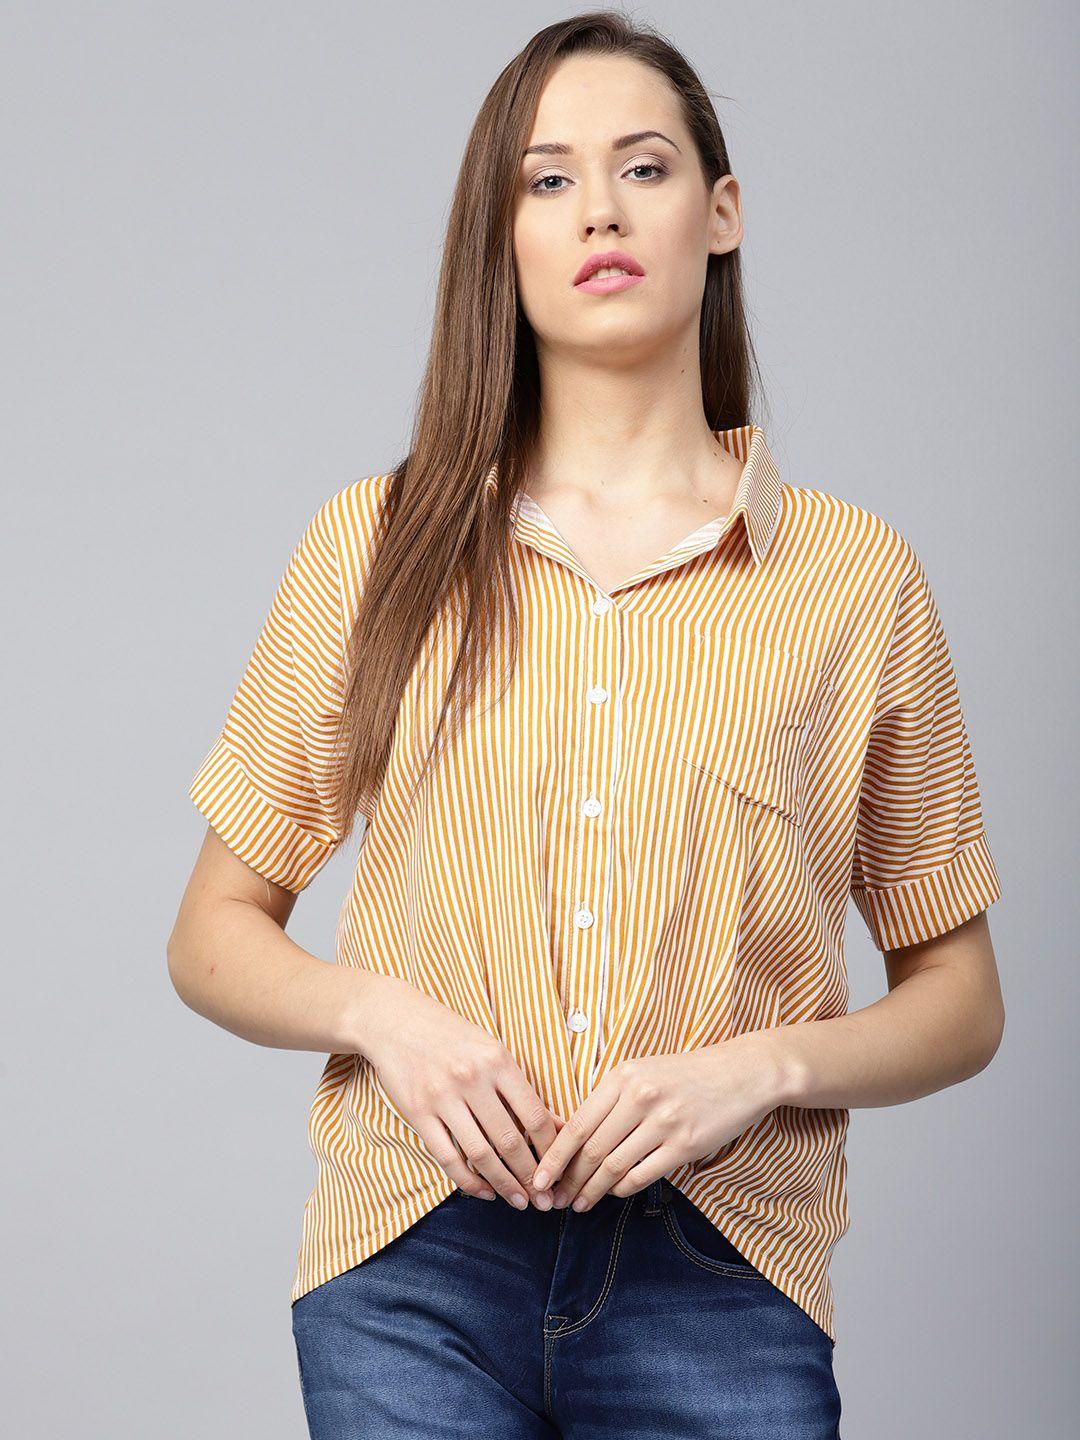 athena-mustard-yellow-&-off-white-striped-shirt-style-pure-cotton-top